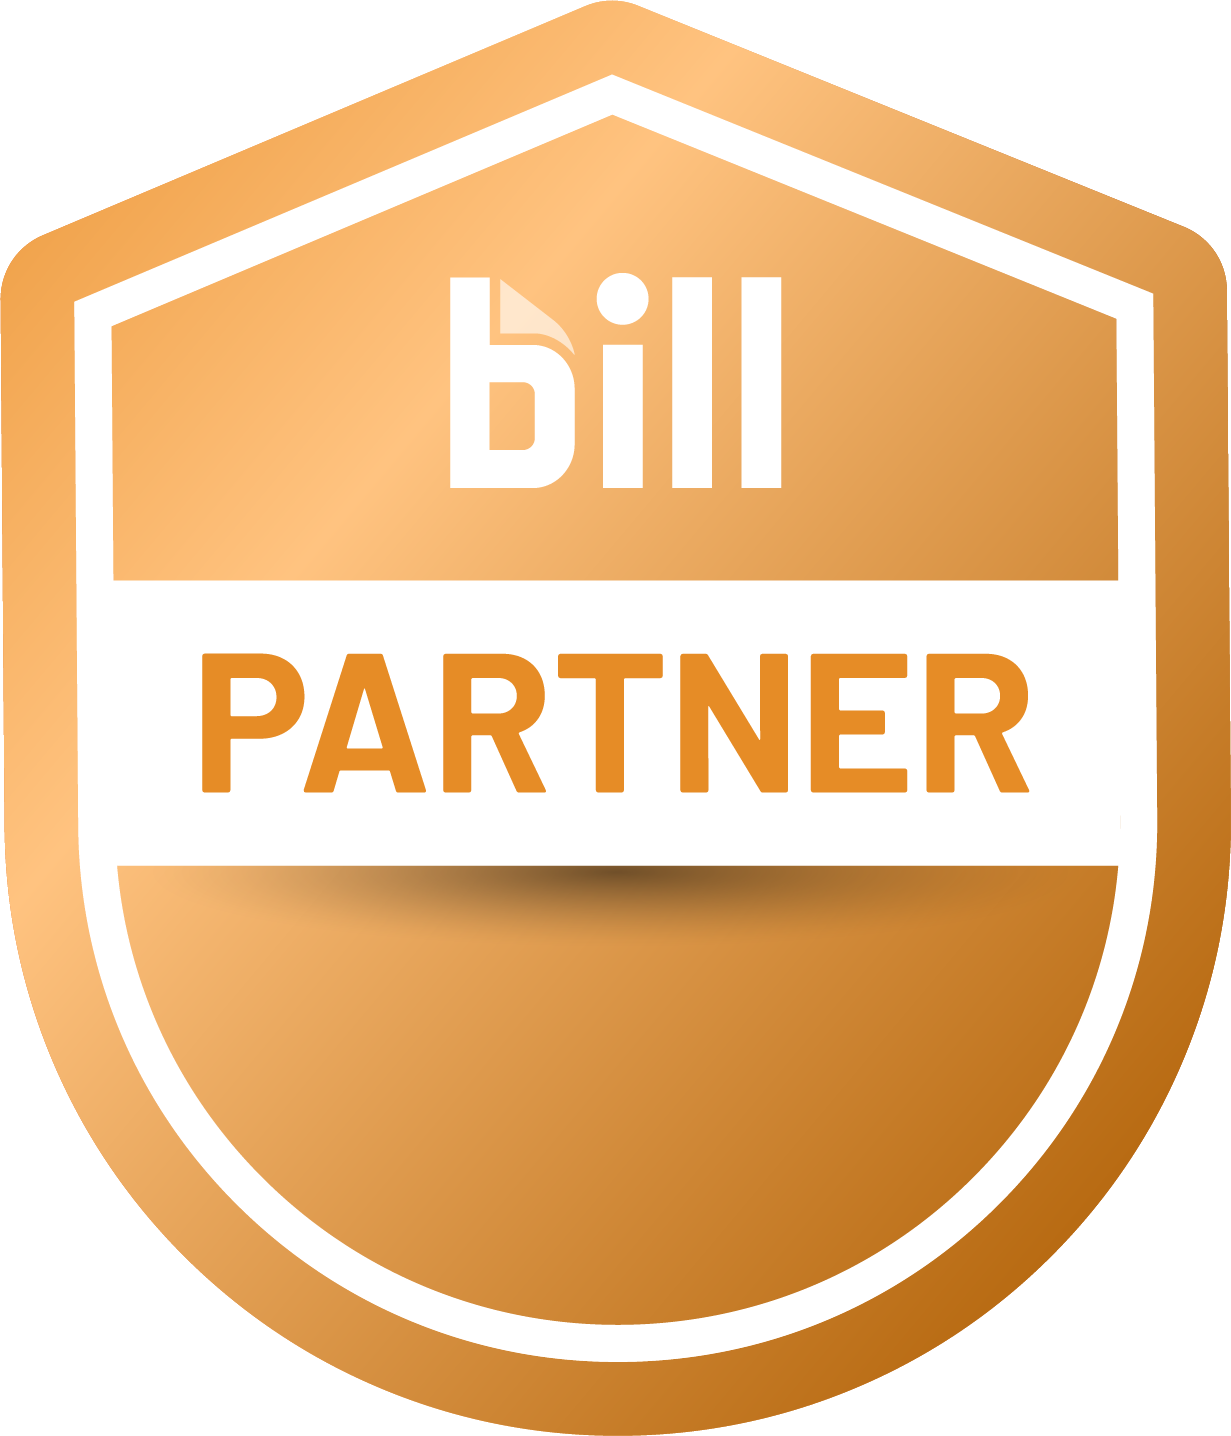 BILL Accountant Partner Program - Partne